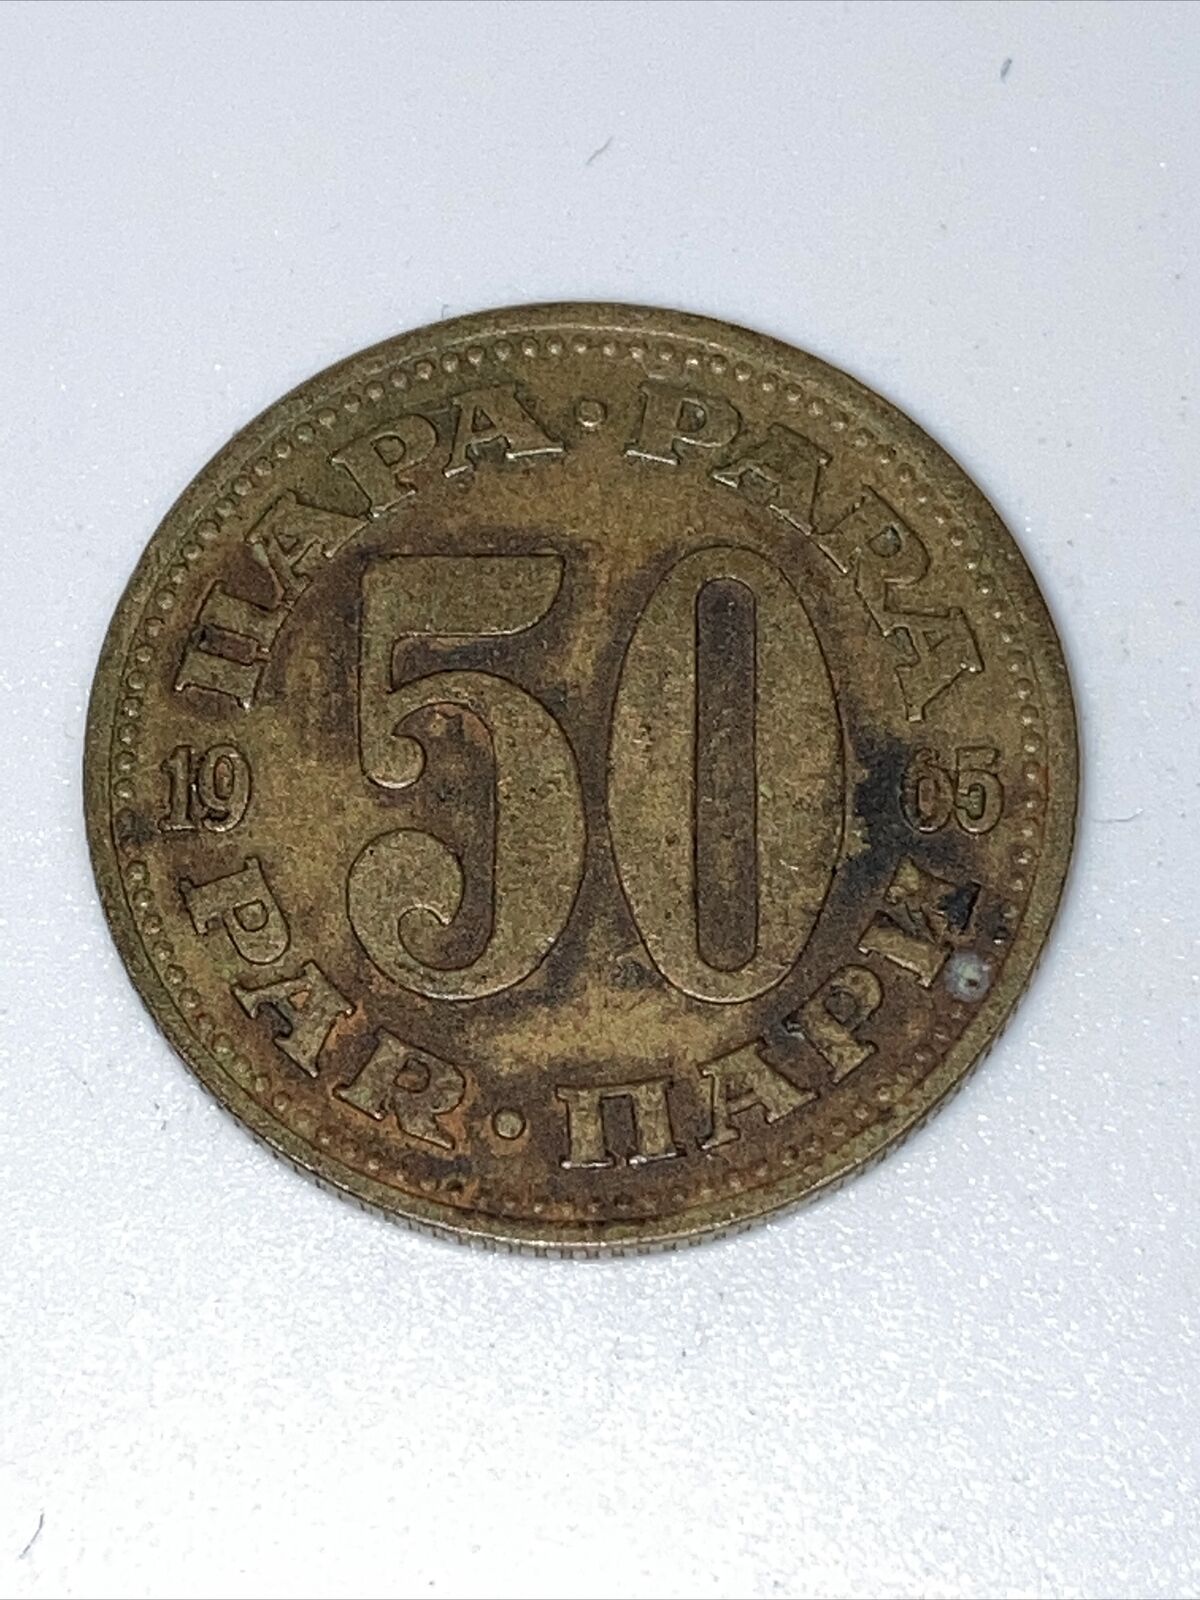 Yugoslavia Genuine Jugoslavia 50 para coin service 1965